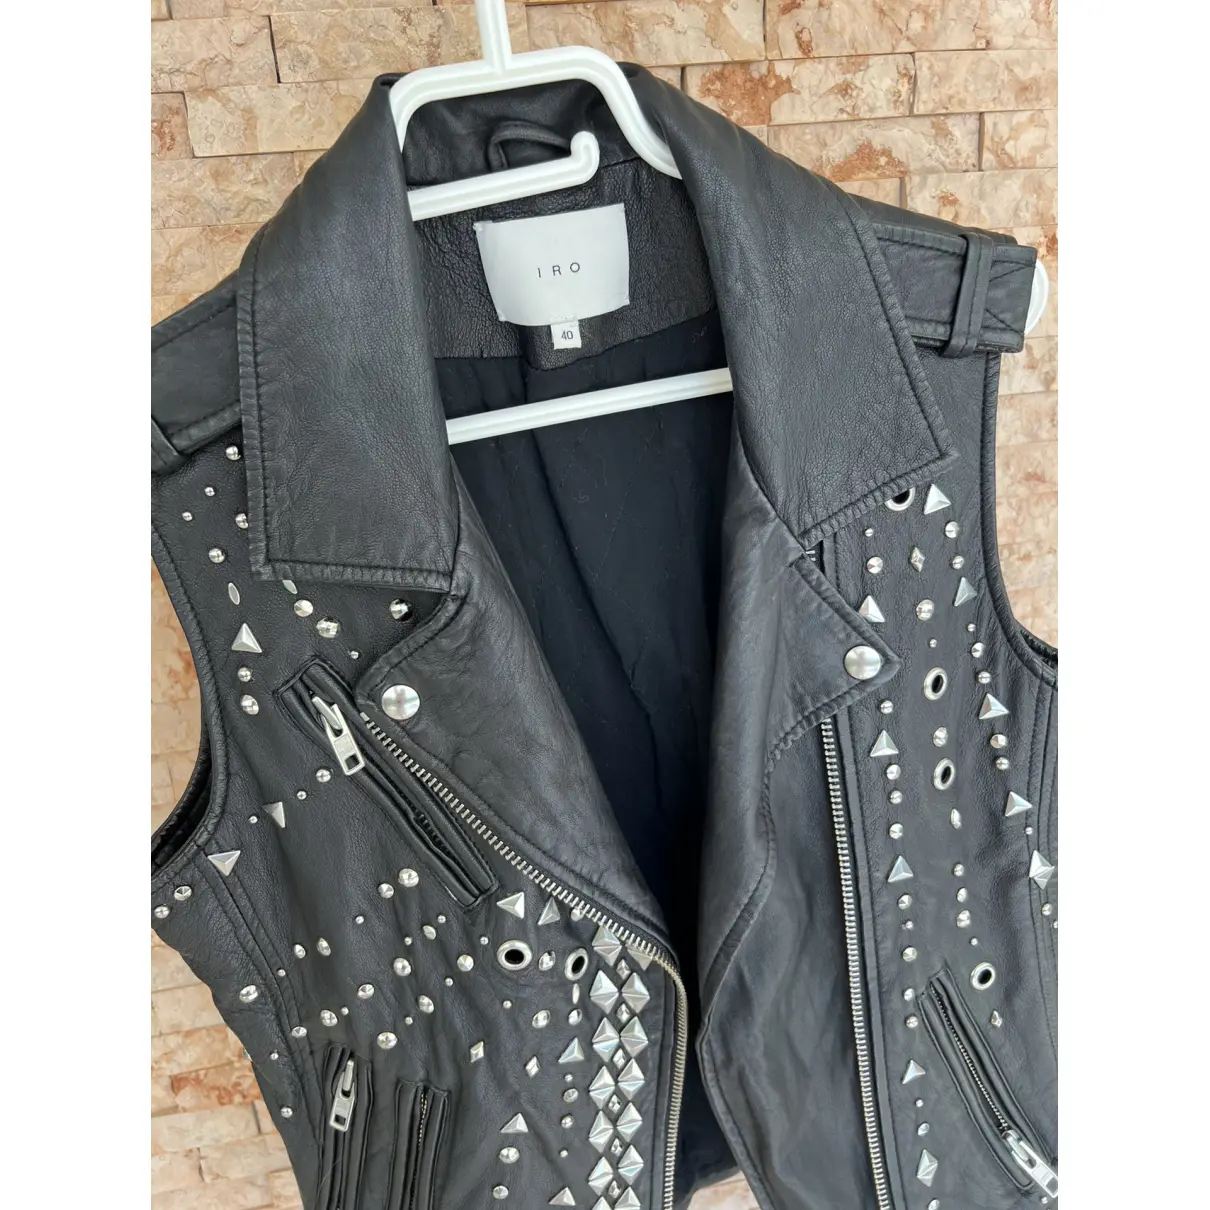 Buy Iro Leather jacket online